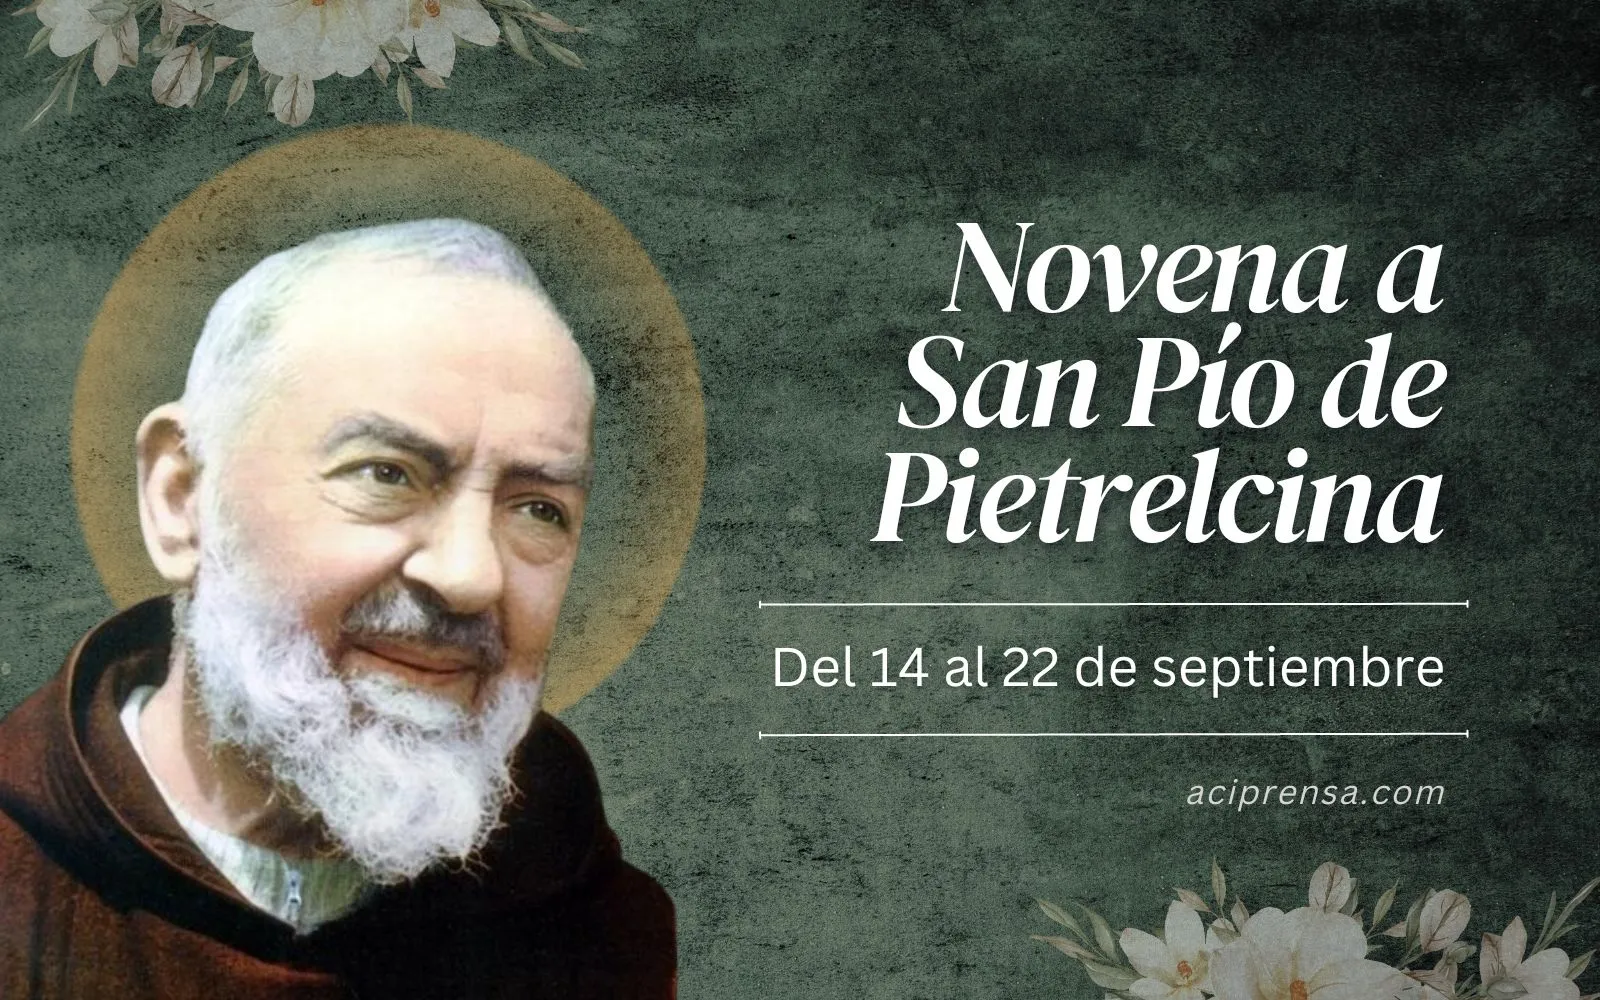 Novena a San Pío de Pietrelcina